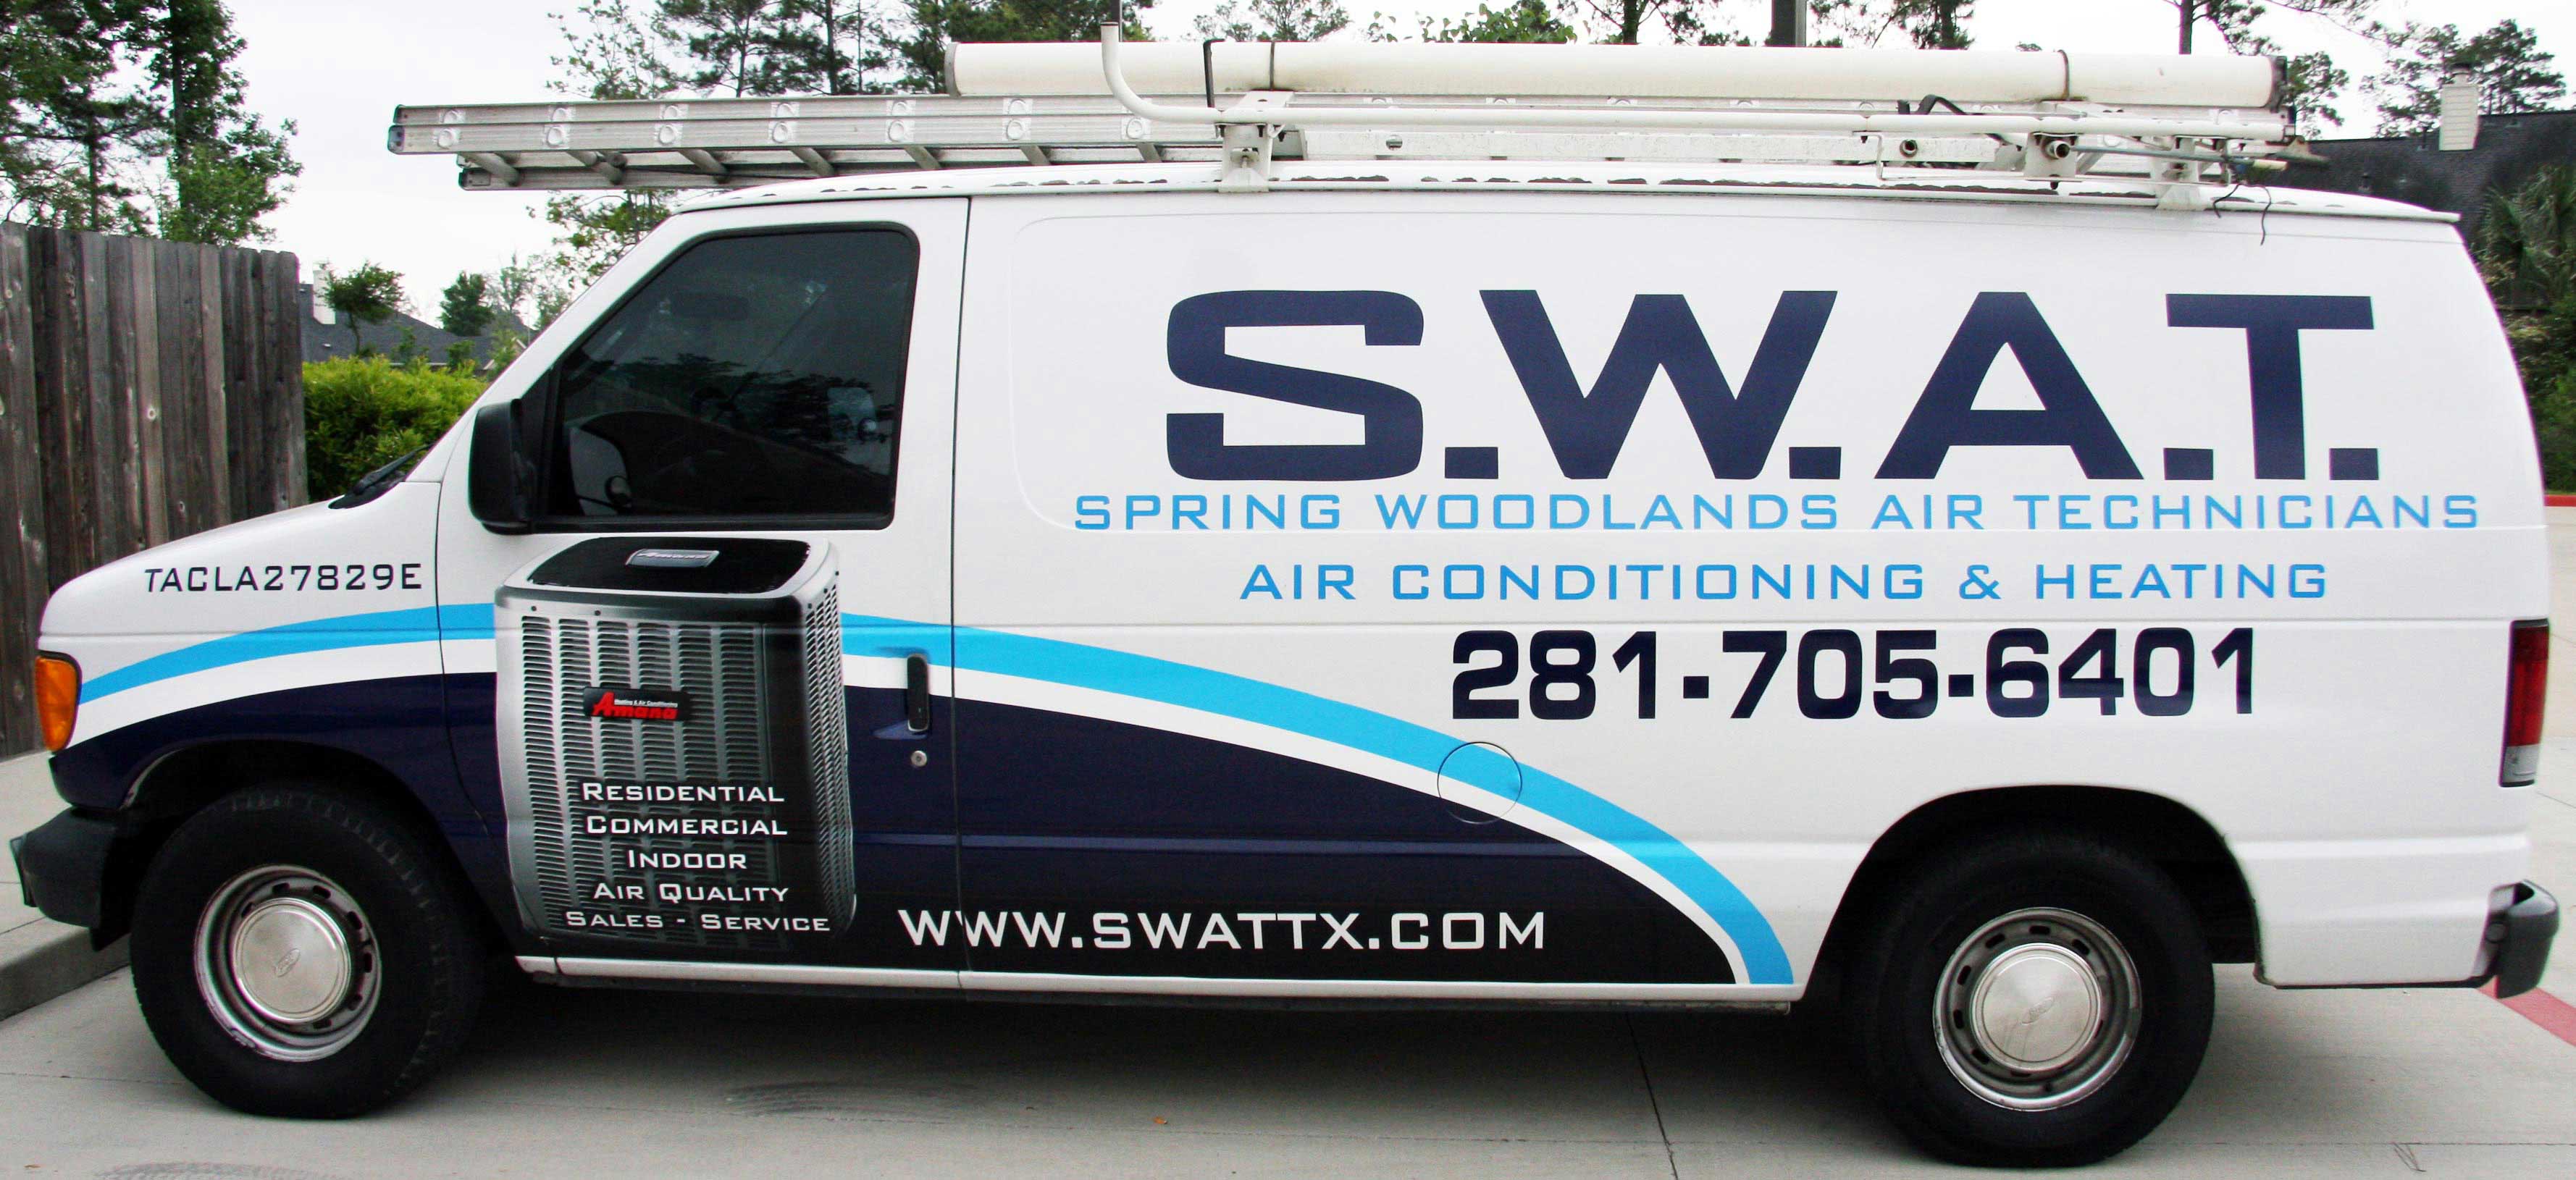 Commercial HVAC Service & Repair Greenville SC - General Air